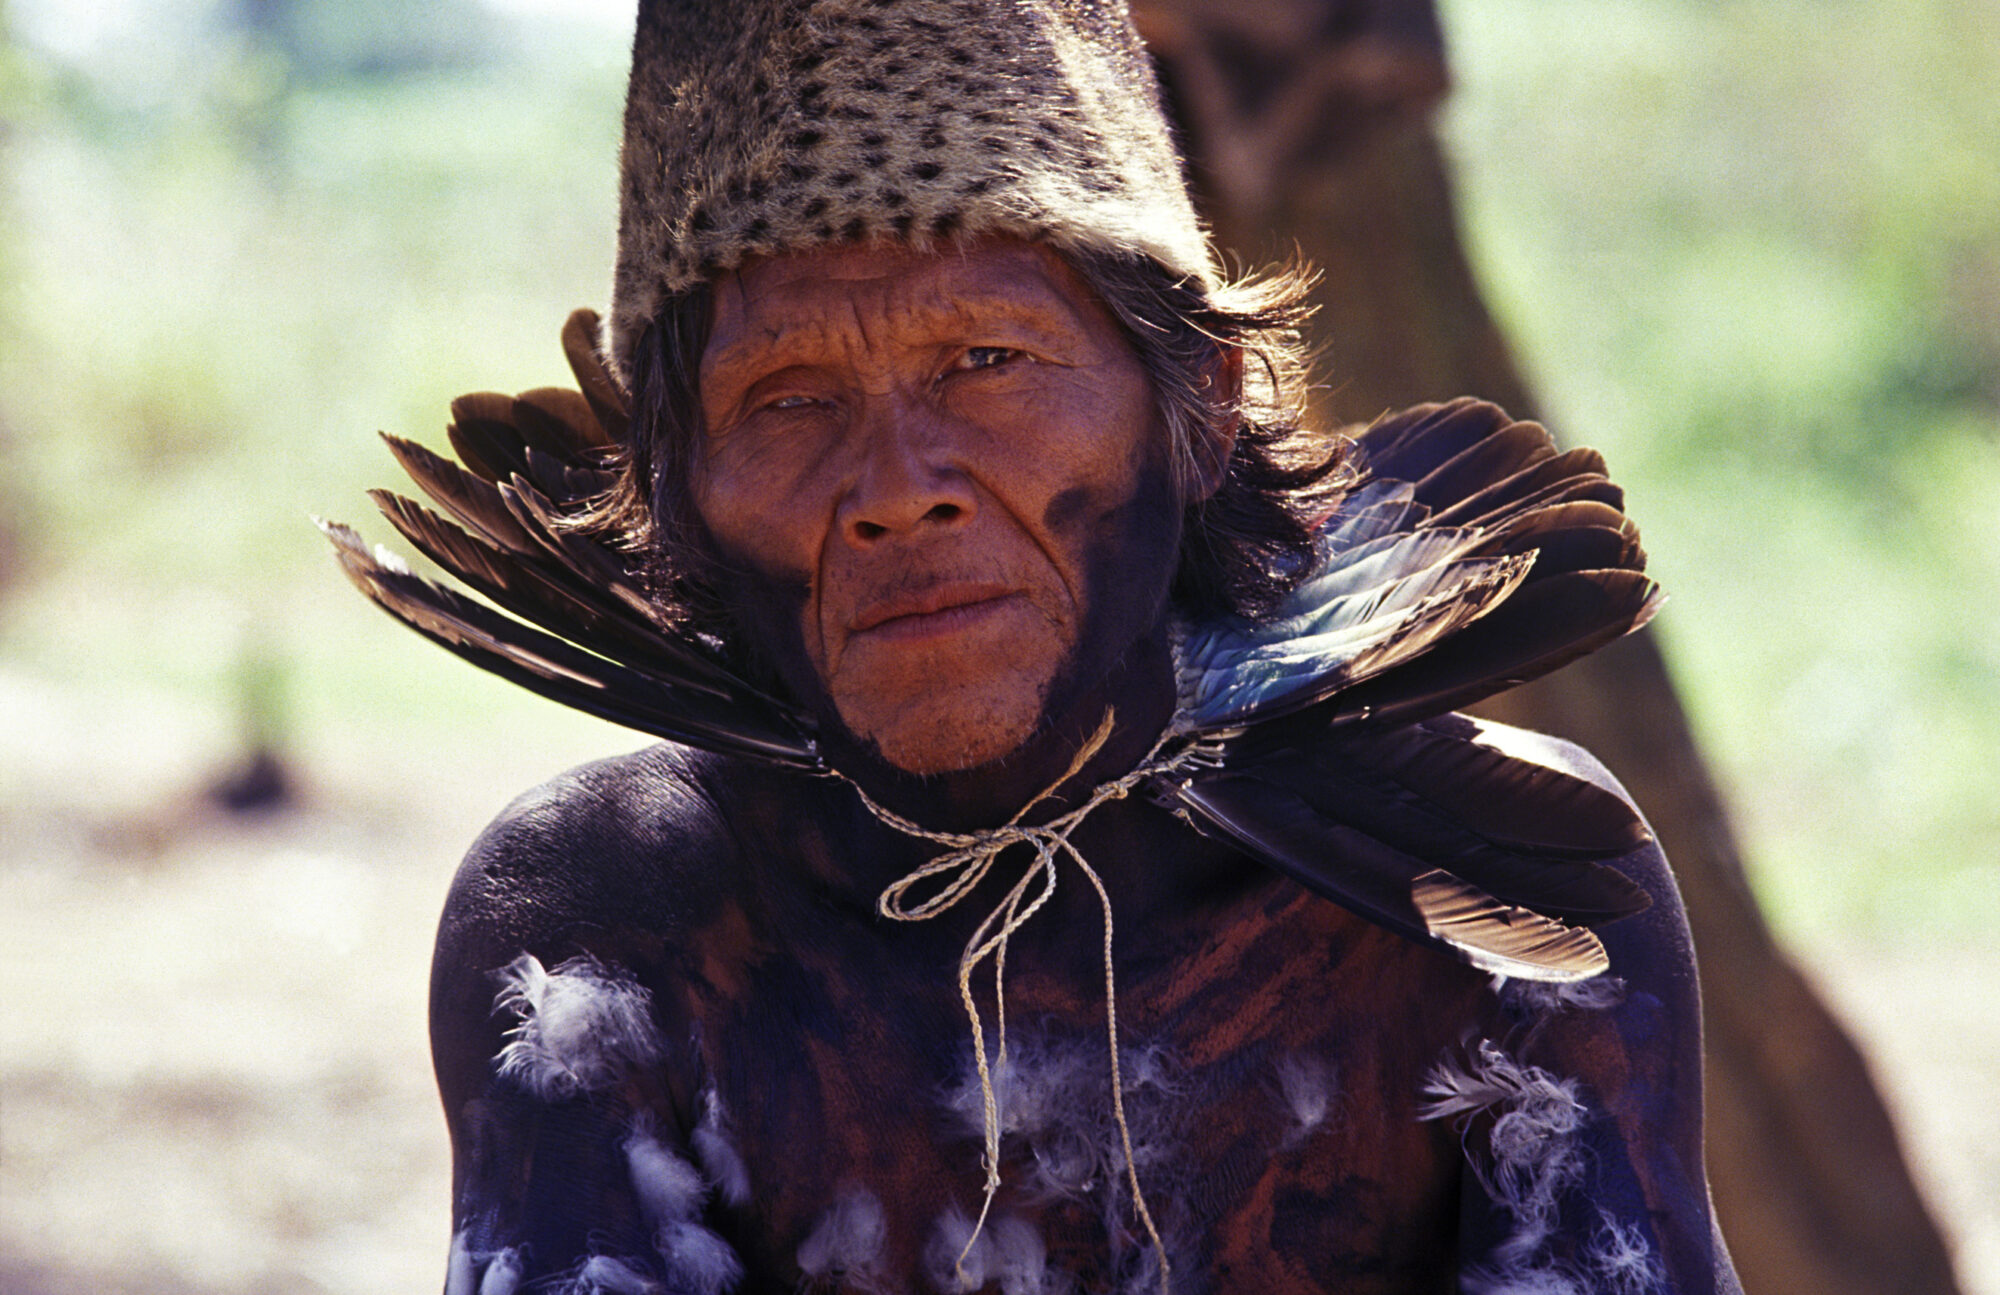 <p><span style="font-weight: 400;">In recent decades, the Ayoreo people have been forced to leave their ancestral lands in the Paraguayan Chaco, but 150 members remained uncontacted (Image: </span><a href="https://www.flickr.com/photos/136885922@N06/22895340351/in/photolist-ATbB2r-ATbDr6-6yRR9D-6AXUNX-AScEqi-AgxPgZ-6DhagZ-6DmetQ-6Dmgpj-fhBLoa-Ff3KC-6BSKJs-fhS31u-6BSKJL-5Qq882-cJsxgb-ej3W17-tiL2L-6Dhddc-6BSKKo-6Dhbup-atQGBr-atQGh6-atQHi4-2fxuidF-K2heiW-oZybVt-RM5kn4-Xo1wpm-FffMH-8pah12-FfbJL-FmCfv-FmwW1-Ff5bS-5zg59T-54Z6GB-cJsB4E-vtj3rn-atQHSM-atQGWc-FfbHS-FmwVW-5zg4Hv-553Vz3-Ff5cL-Ff5cw-Ff5cd-Ff3Mh-Ffgsy"><span style="font-weight: 400;">Fotografías Nuevas</span></a><span style="font-weight: 400;"> / </span><a href="https://www.flickr.com/people/136885922@N06/"><span style="font-weight: 400;">Flickr</span></a><span style="font-weight: 400;">, </span><a href="https://creativecommons.org/publicdomain/mark/1.0/"><span style="font-weight: 400;">PD</span></a><span style="font-weight: 400;">)</span></p>